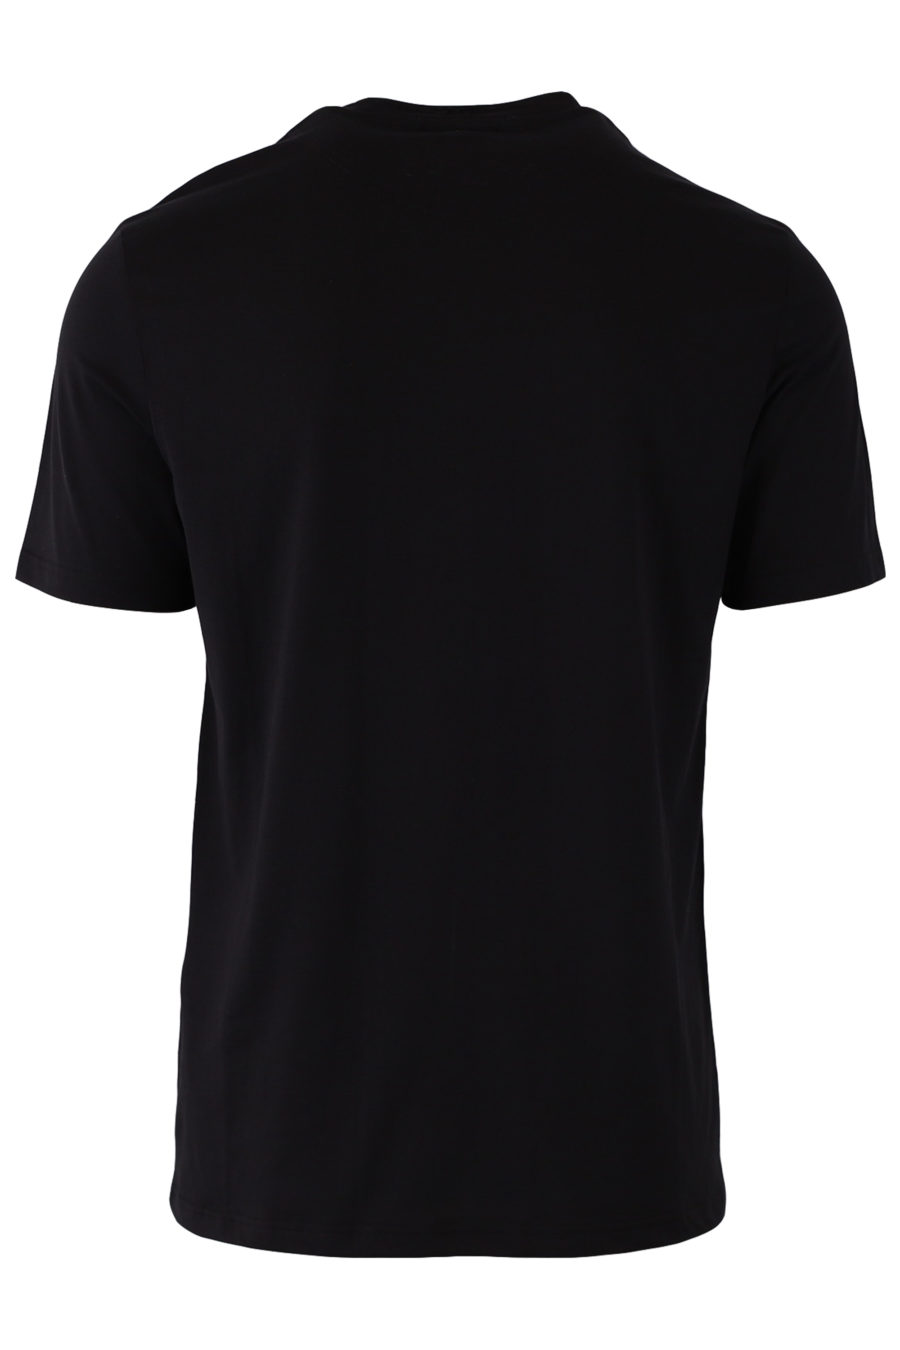 Camiseta interior negra con logo blanco bordado - 4d008c93cf783f70497a85718f40ae7314ef5802